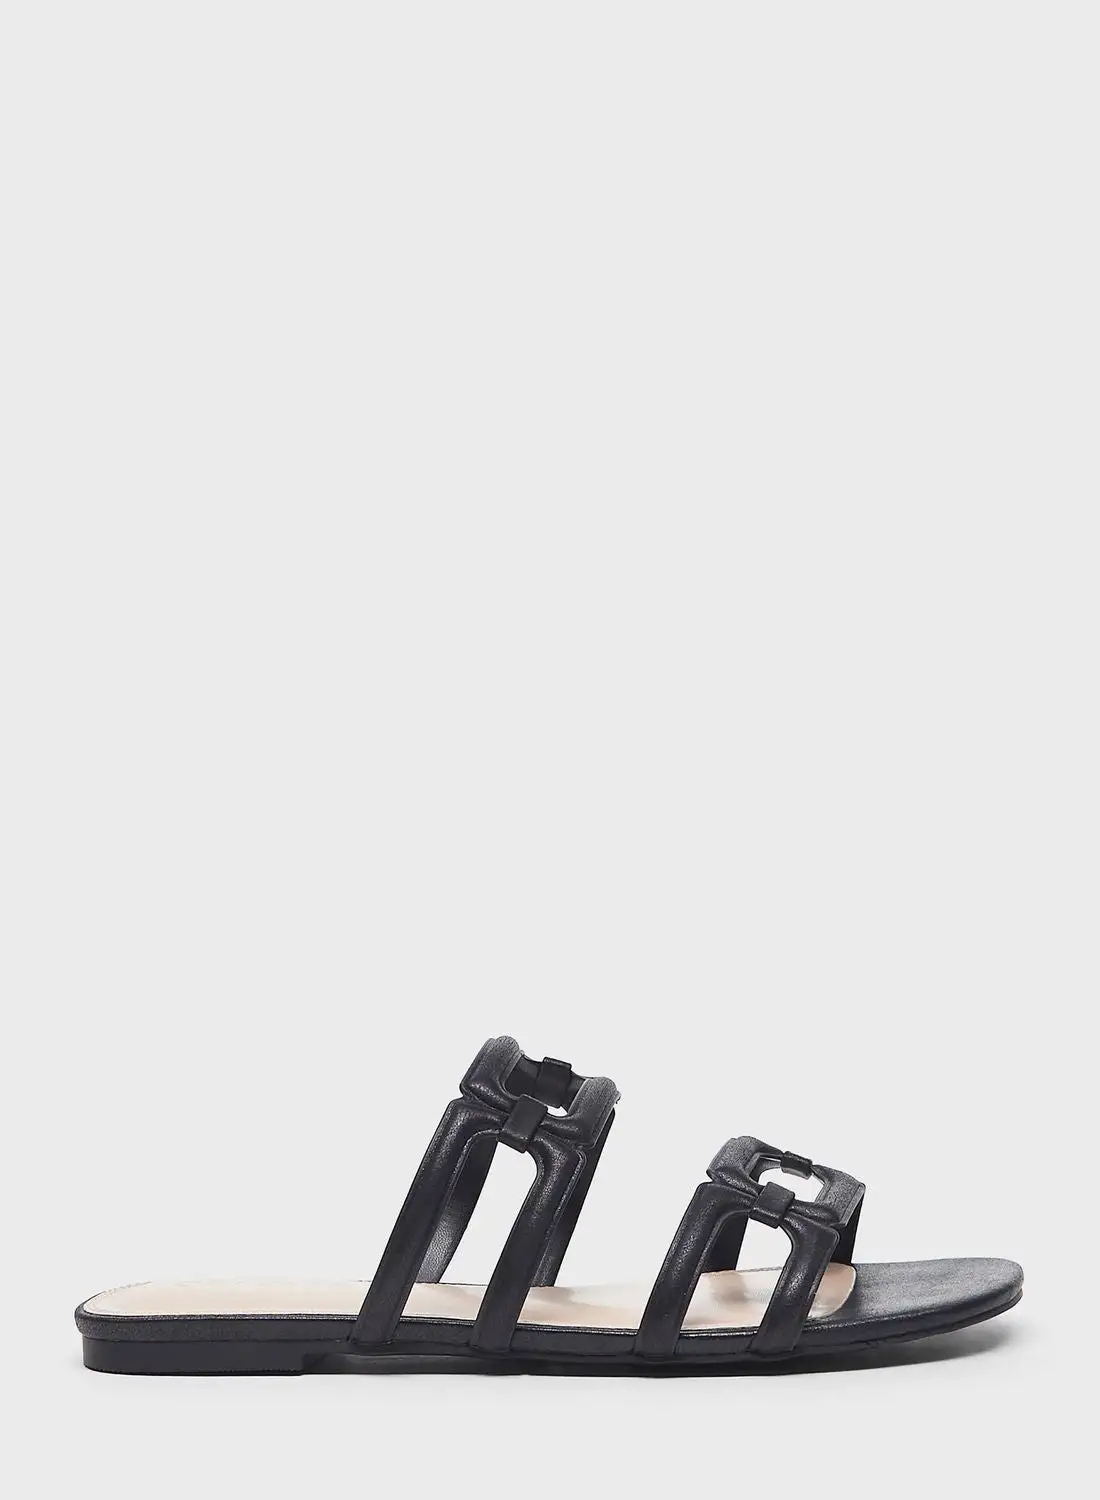 Celeste Multi Strap Flat Sandals